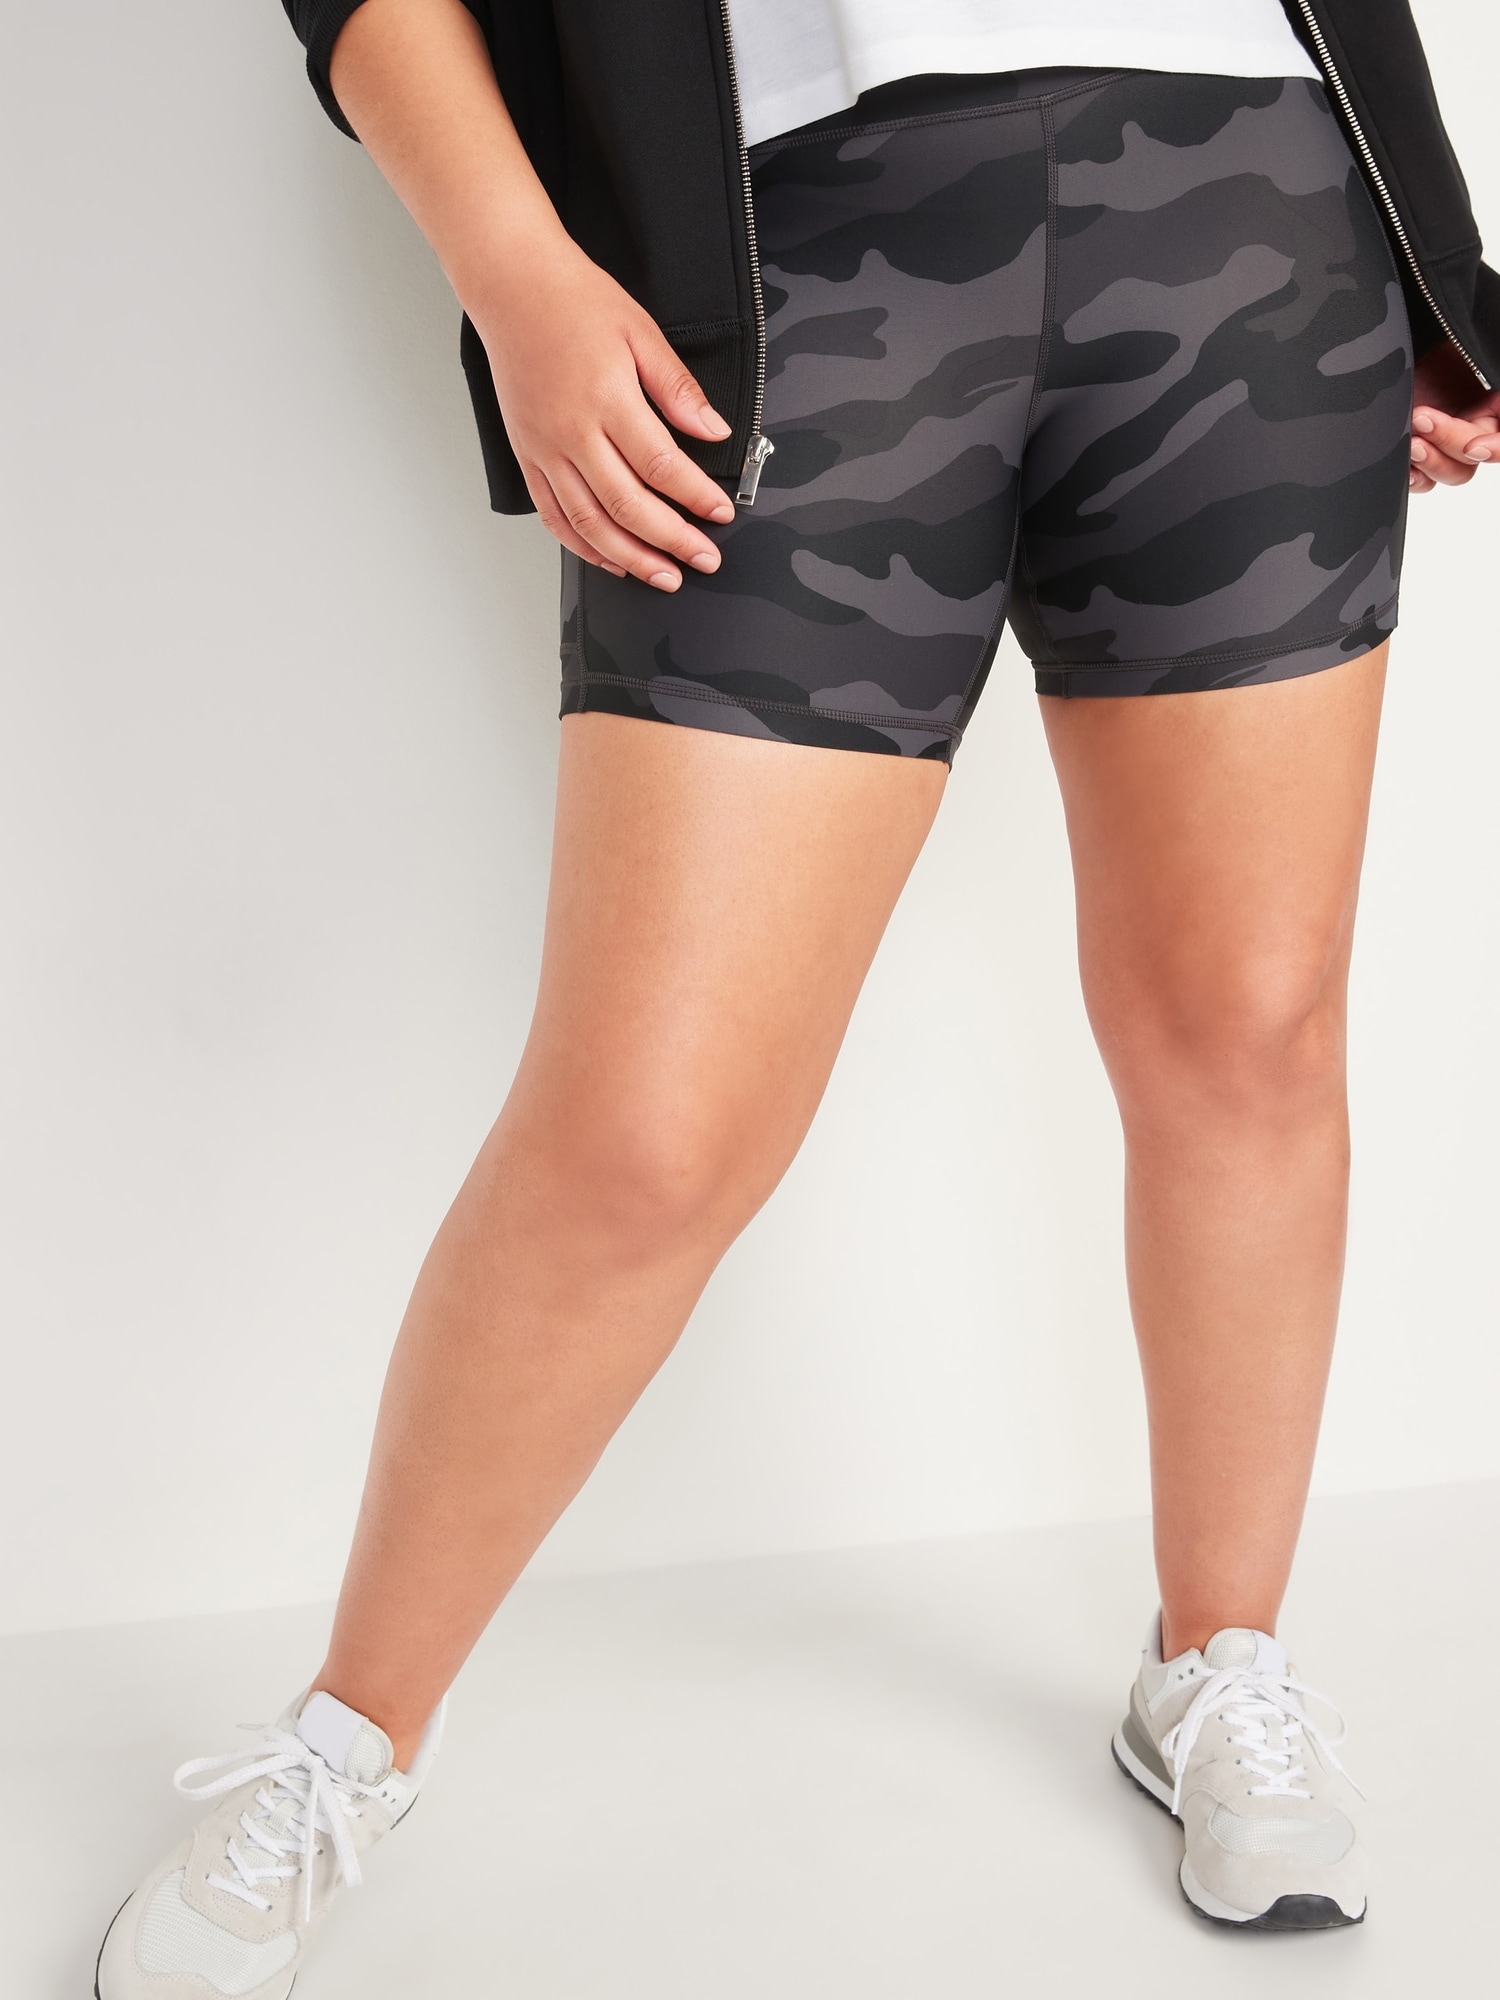 High-Waisted Powersoft Side-Pocket Biker Shorts for Women -- 6-inch inseam